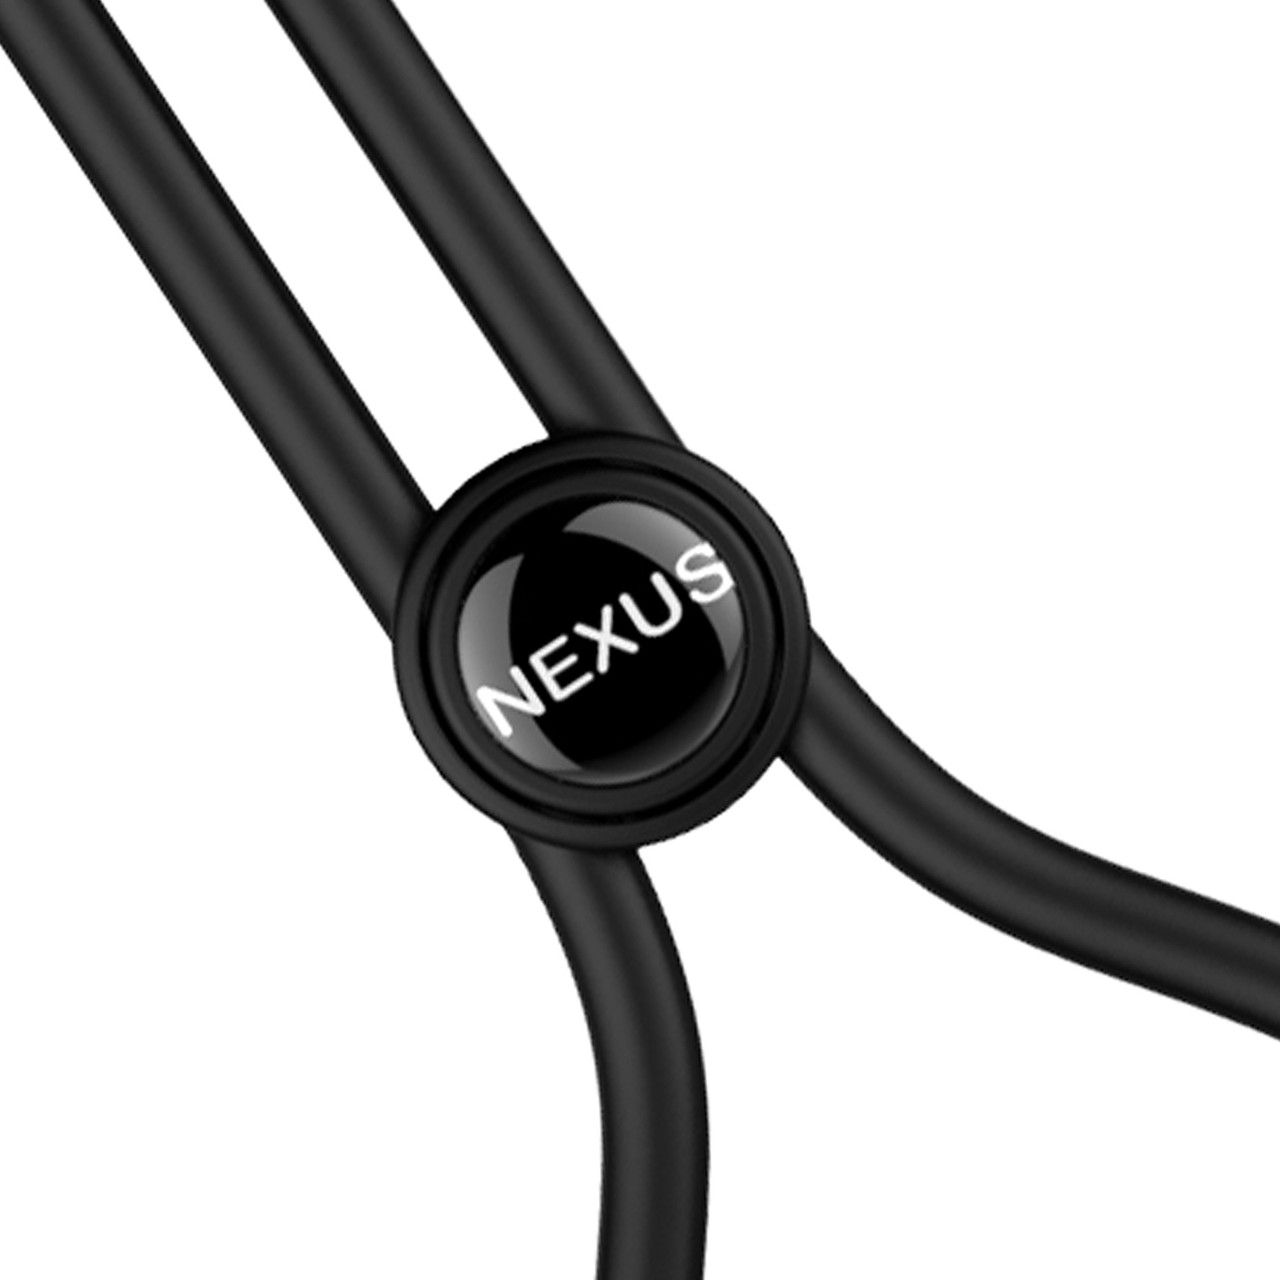 Nexus Enduro Silicone Cock Ring - Black by Libertybelle marketing